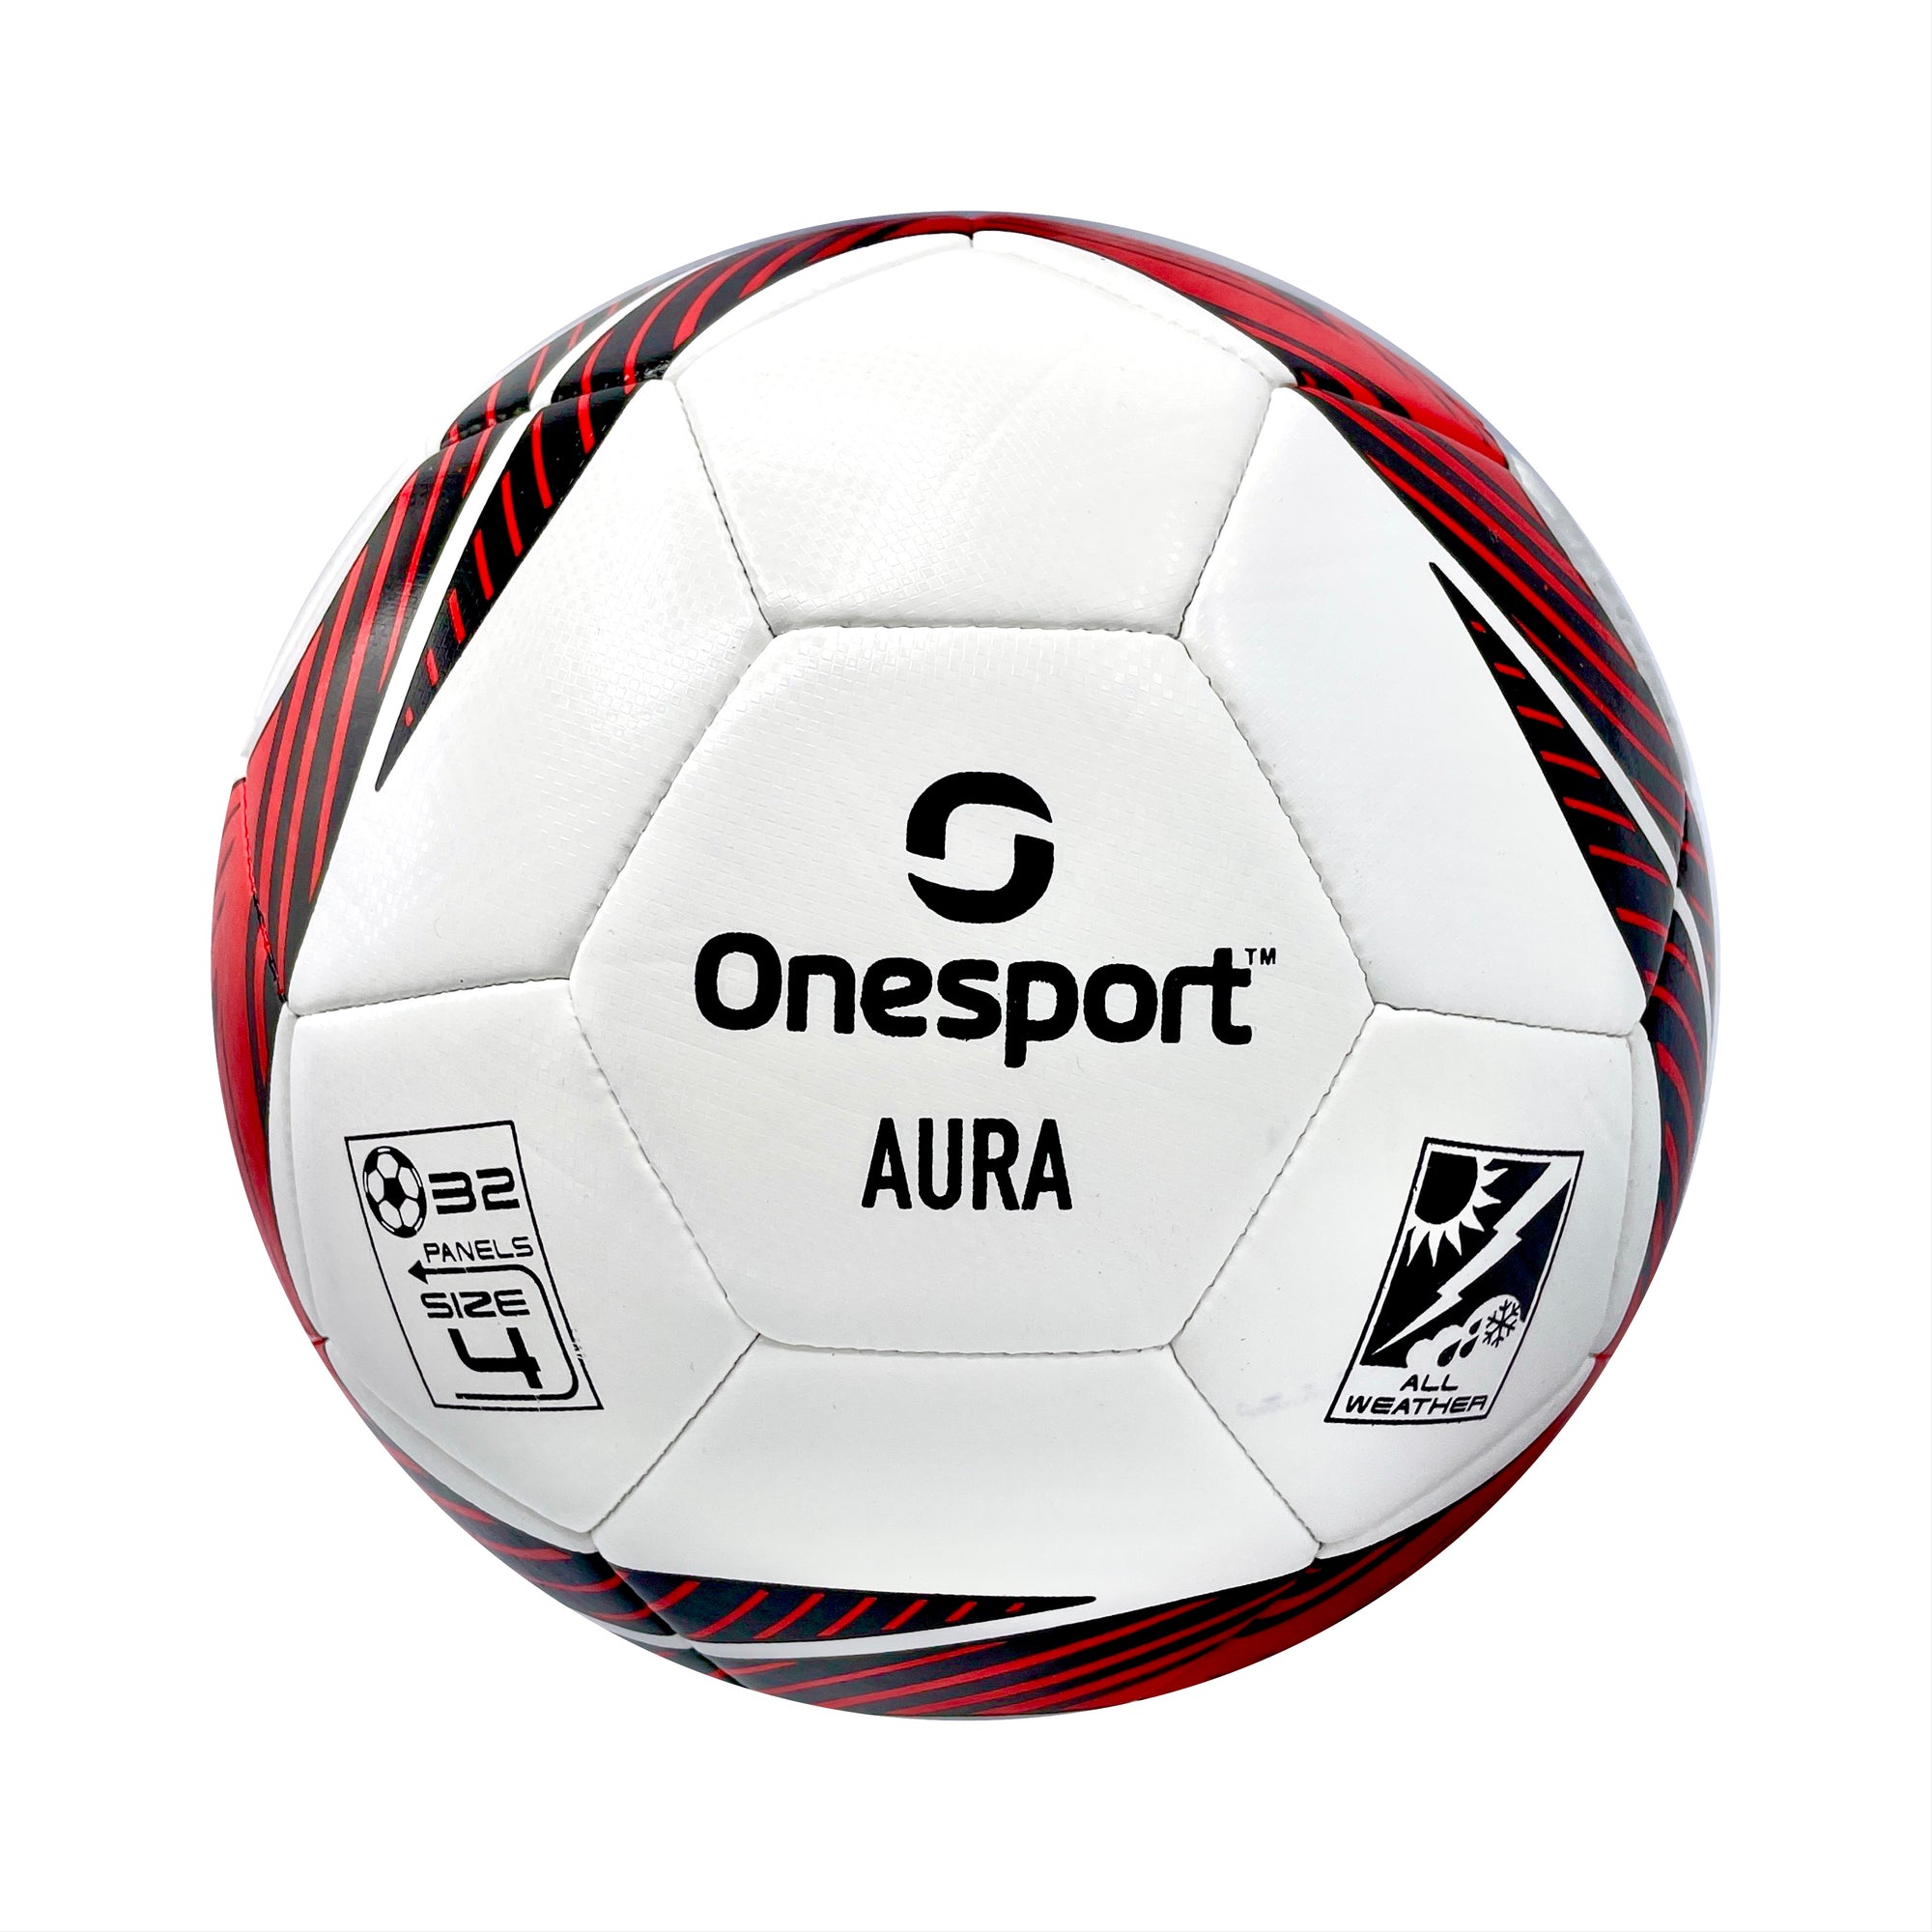 Onesport Aura Football Size 4 White/Red